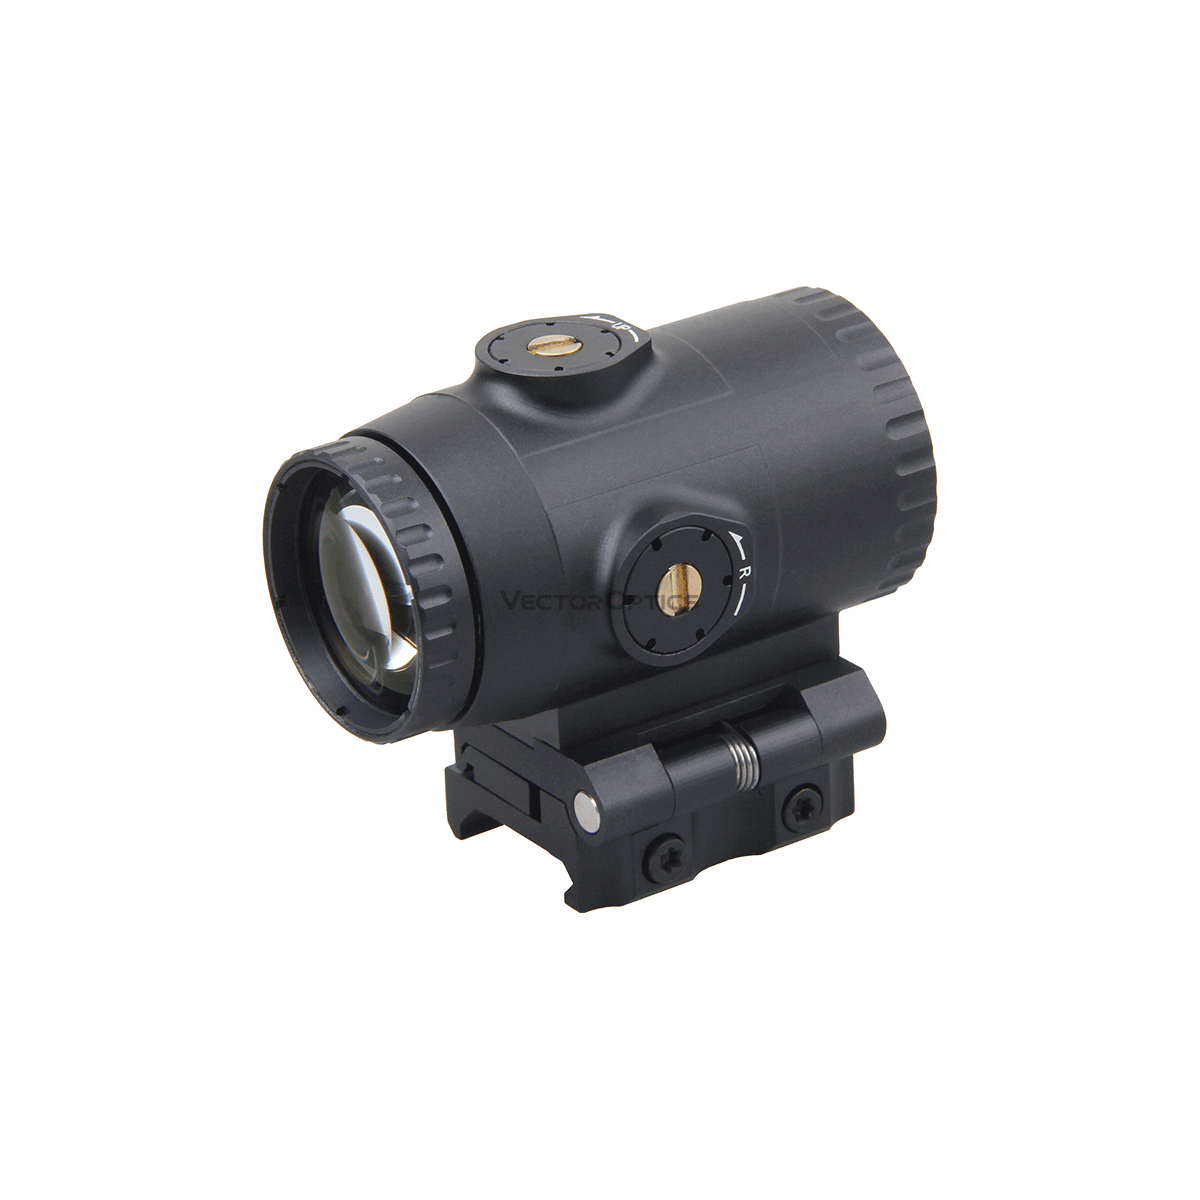 Paragon 3X18 & 5x30 Ultra Compact Magnifier - Vector Optics US 